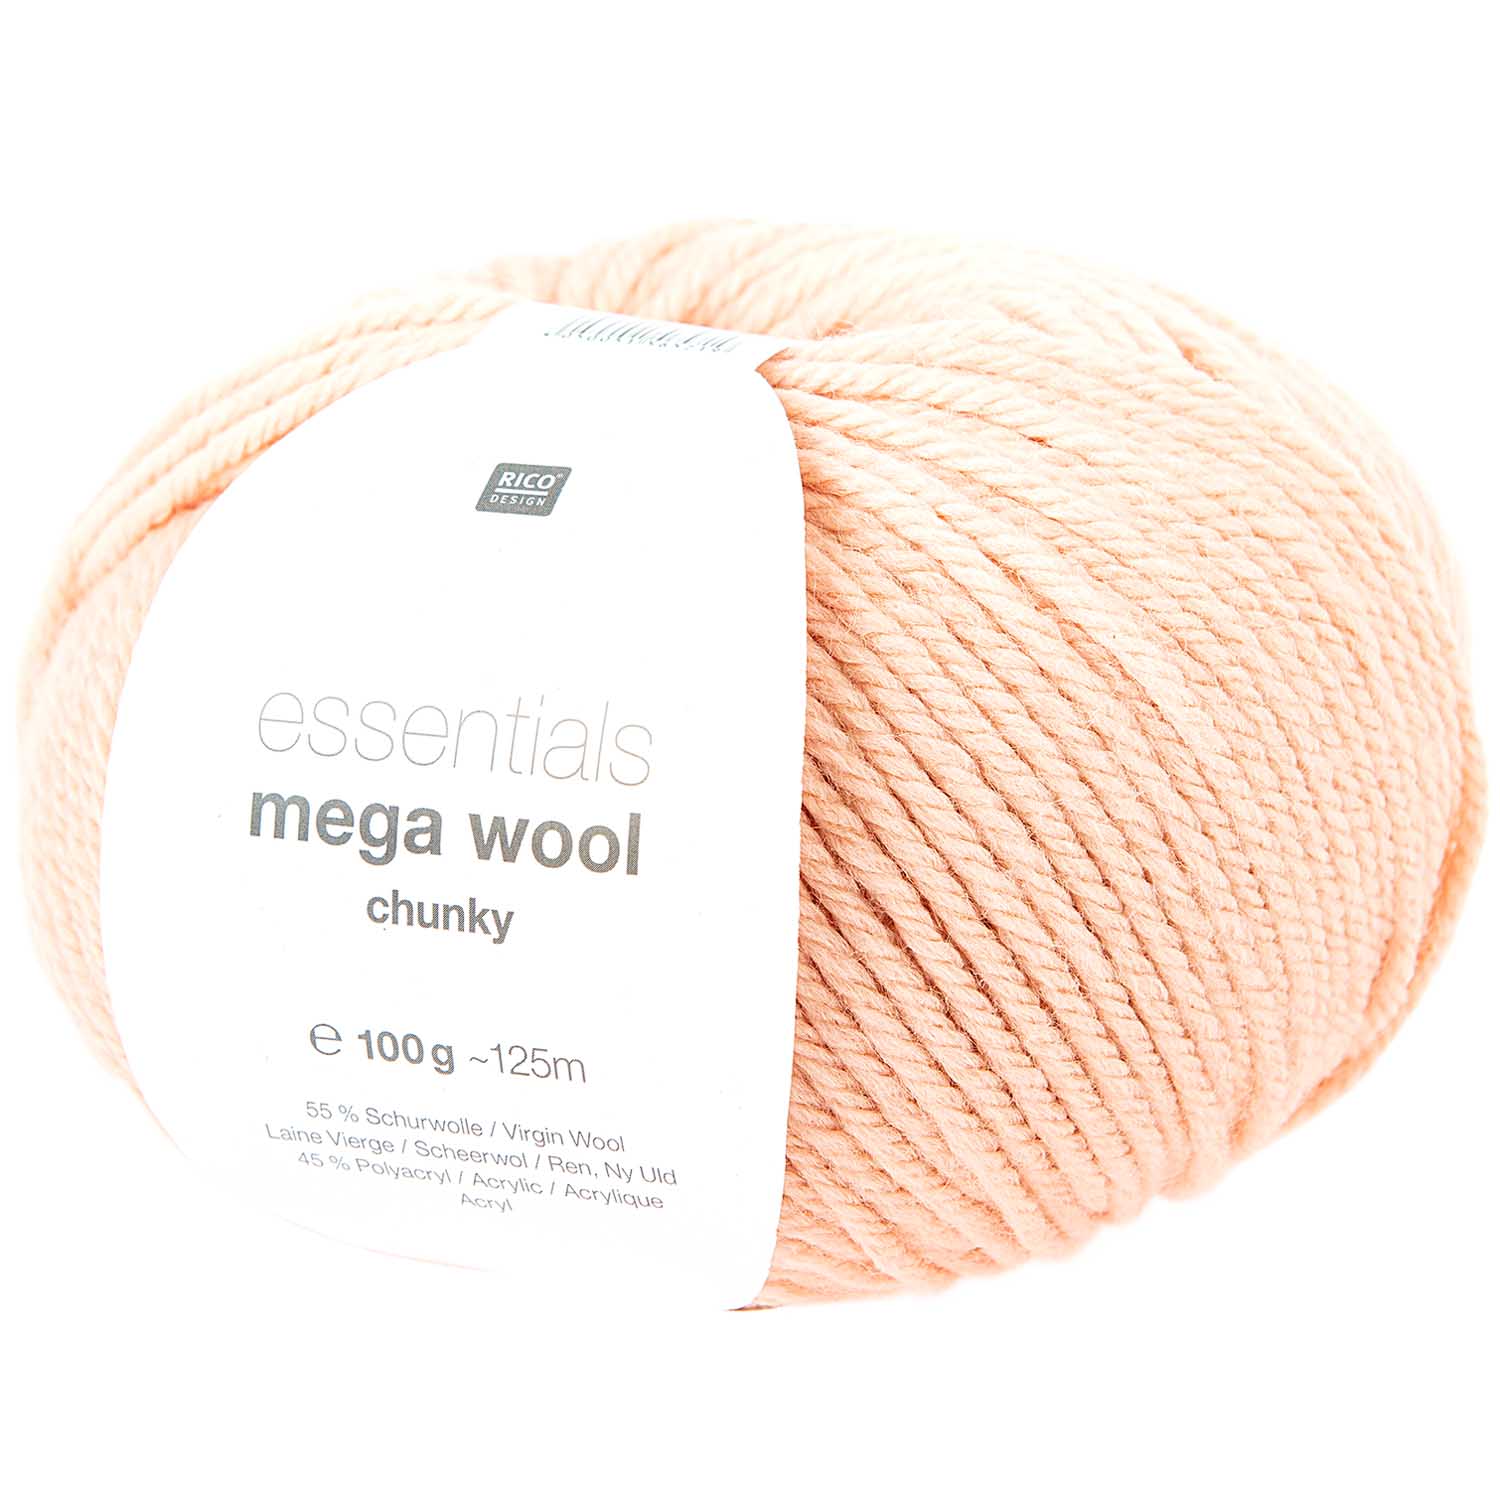 Rico Essentials Mega Wool,  55% Schurwolle/45 % Polyacryl, 100g, 125m